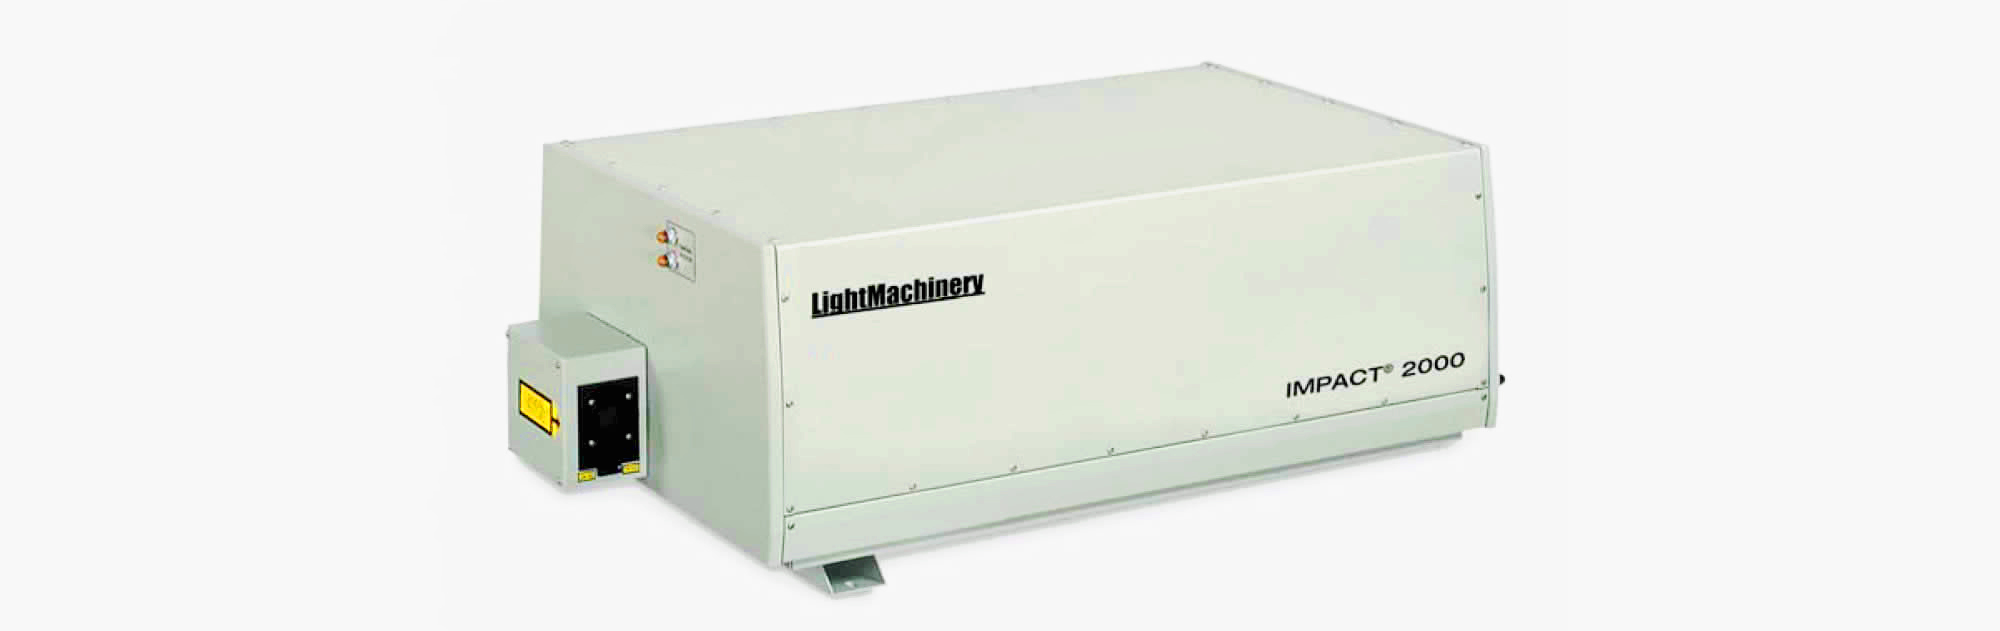 IMPACT-2000-CO2-laser-bright-G.jpg